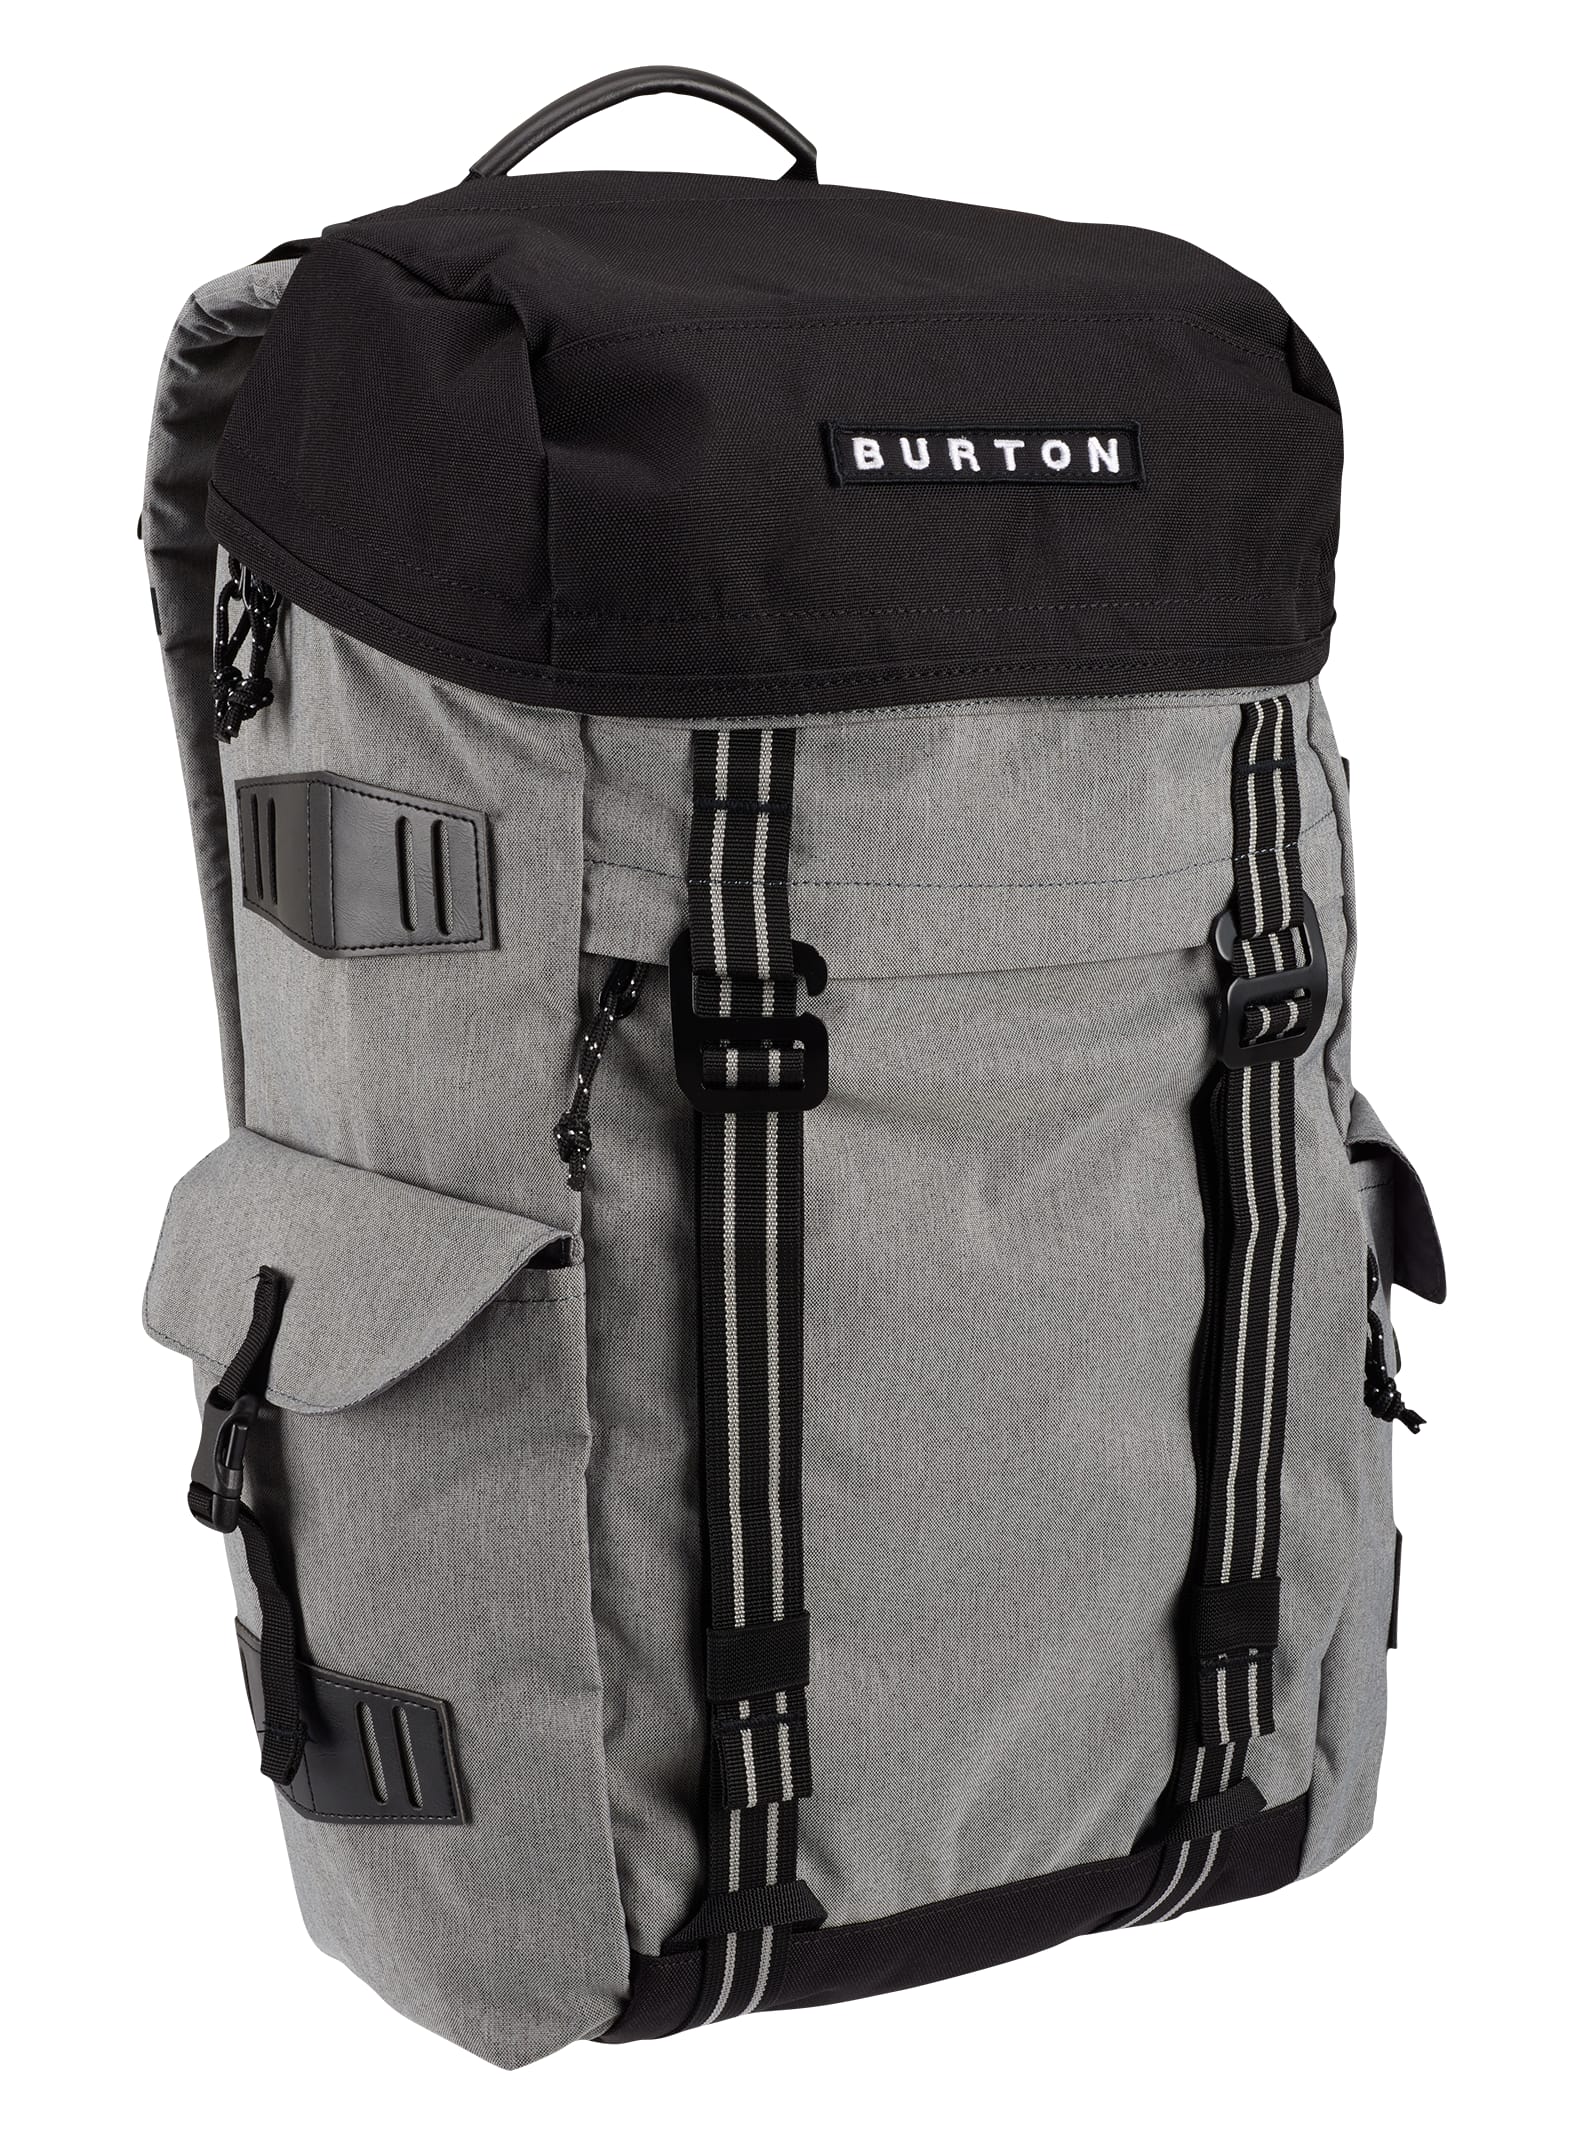 Burton Annex Backpack | Burton.com Fall 2019 US